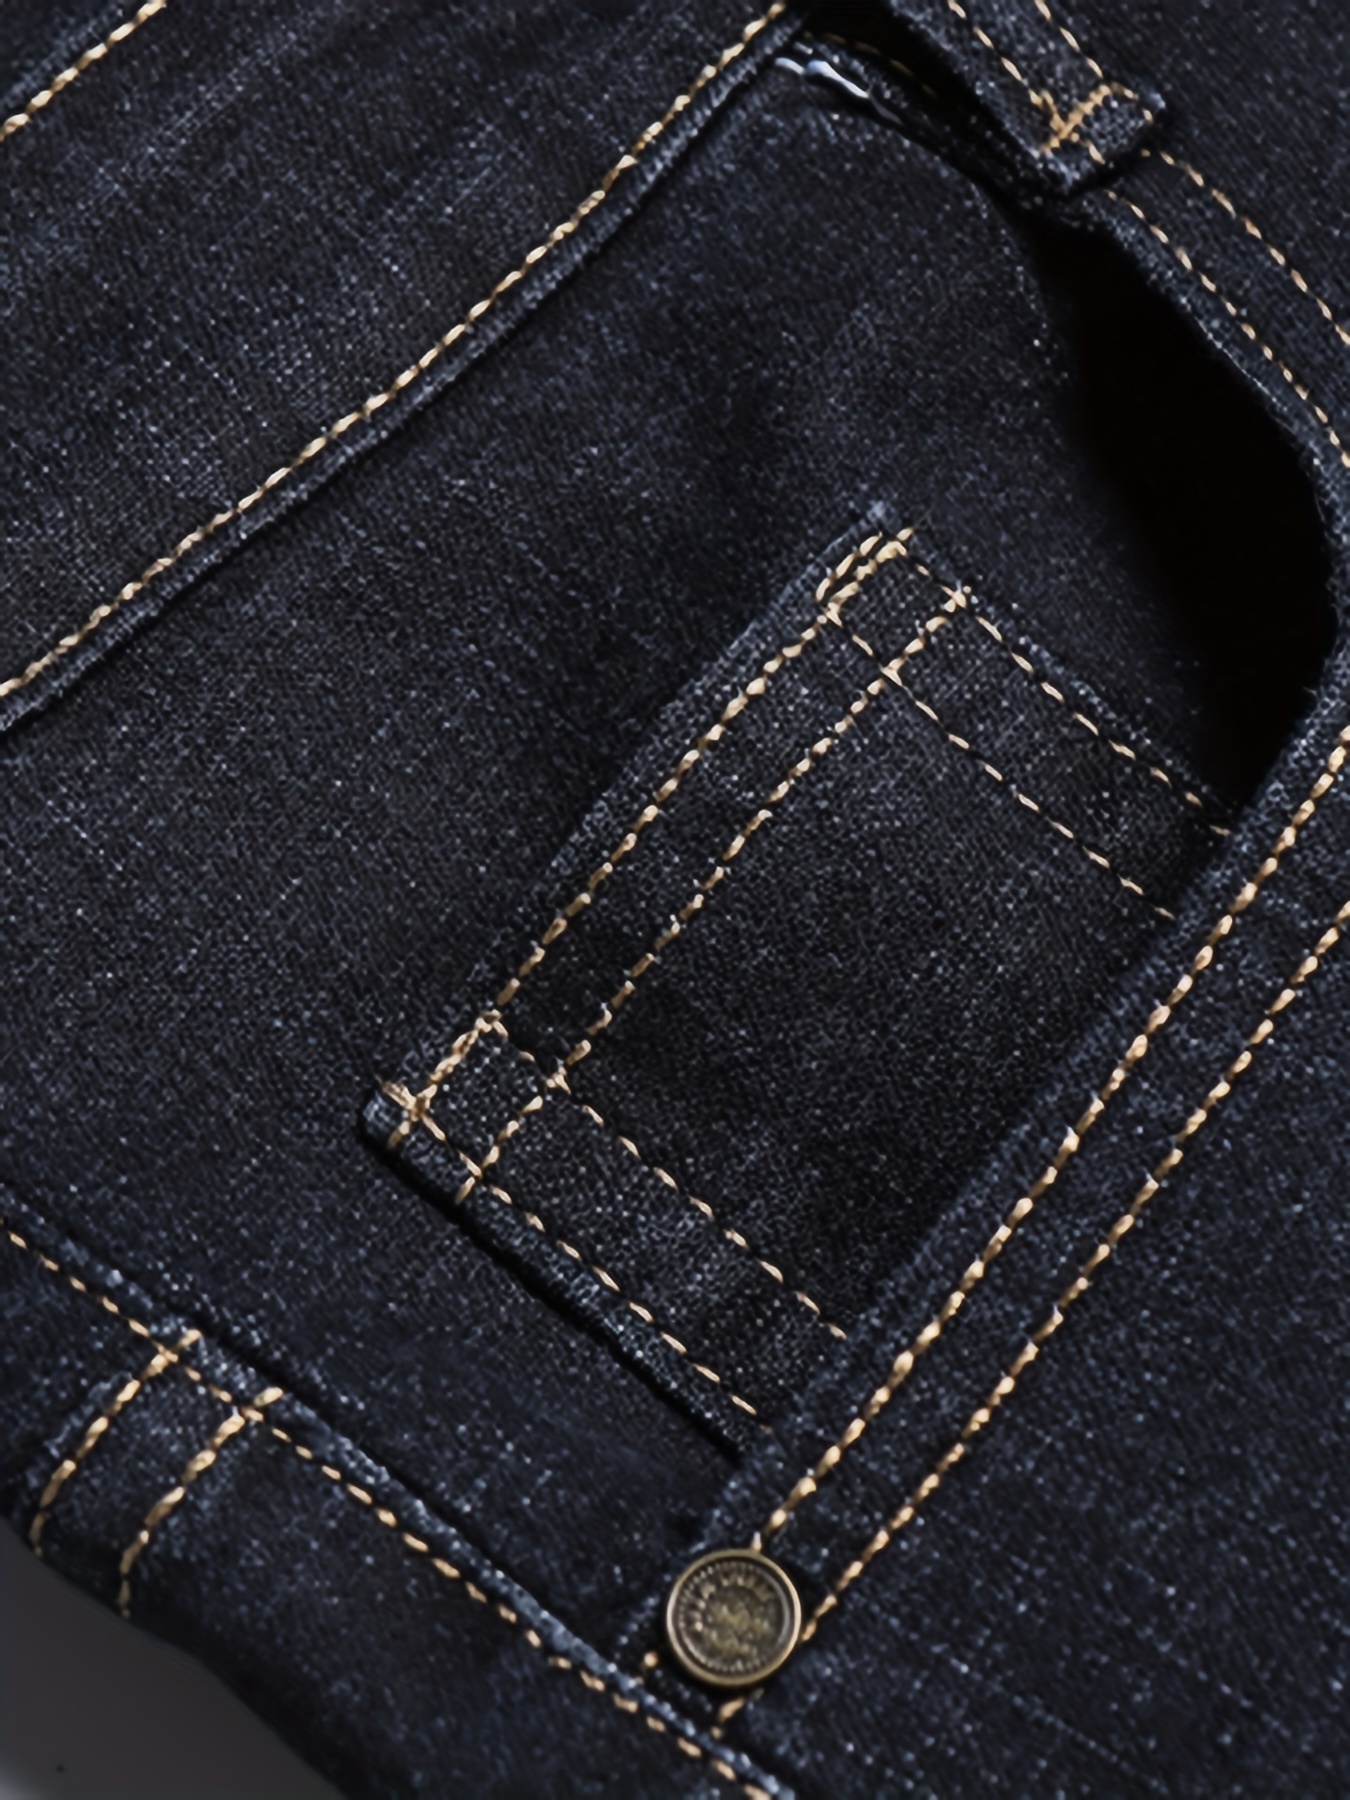 classic design semiformal jeans mens casual stretch denim pants for business